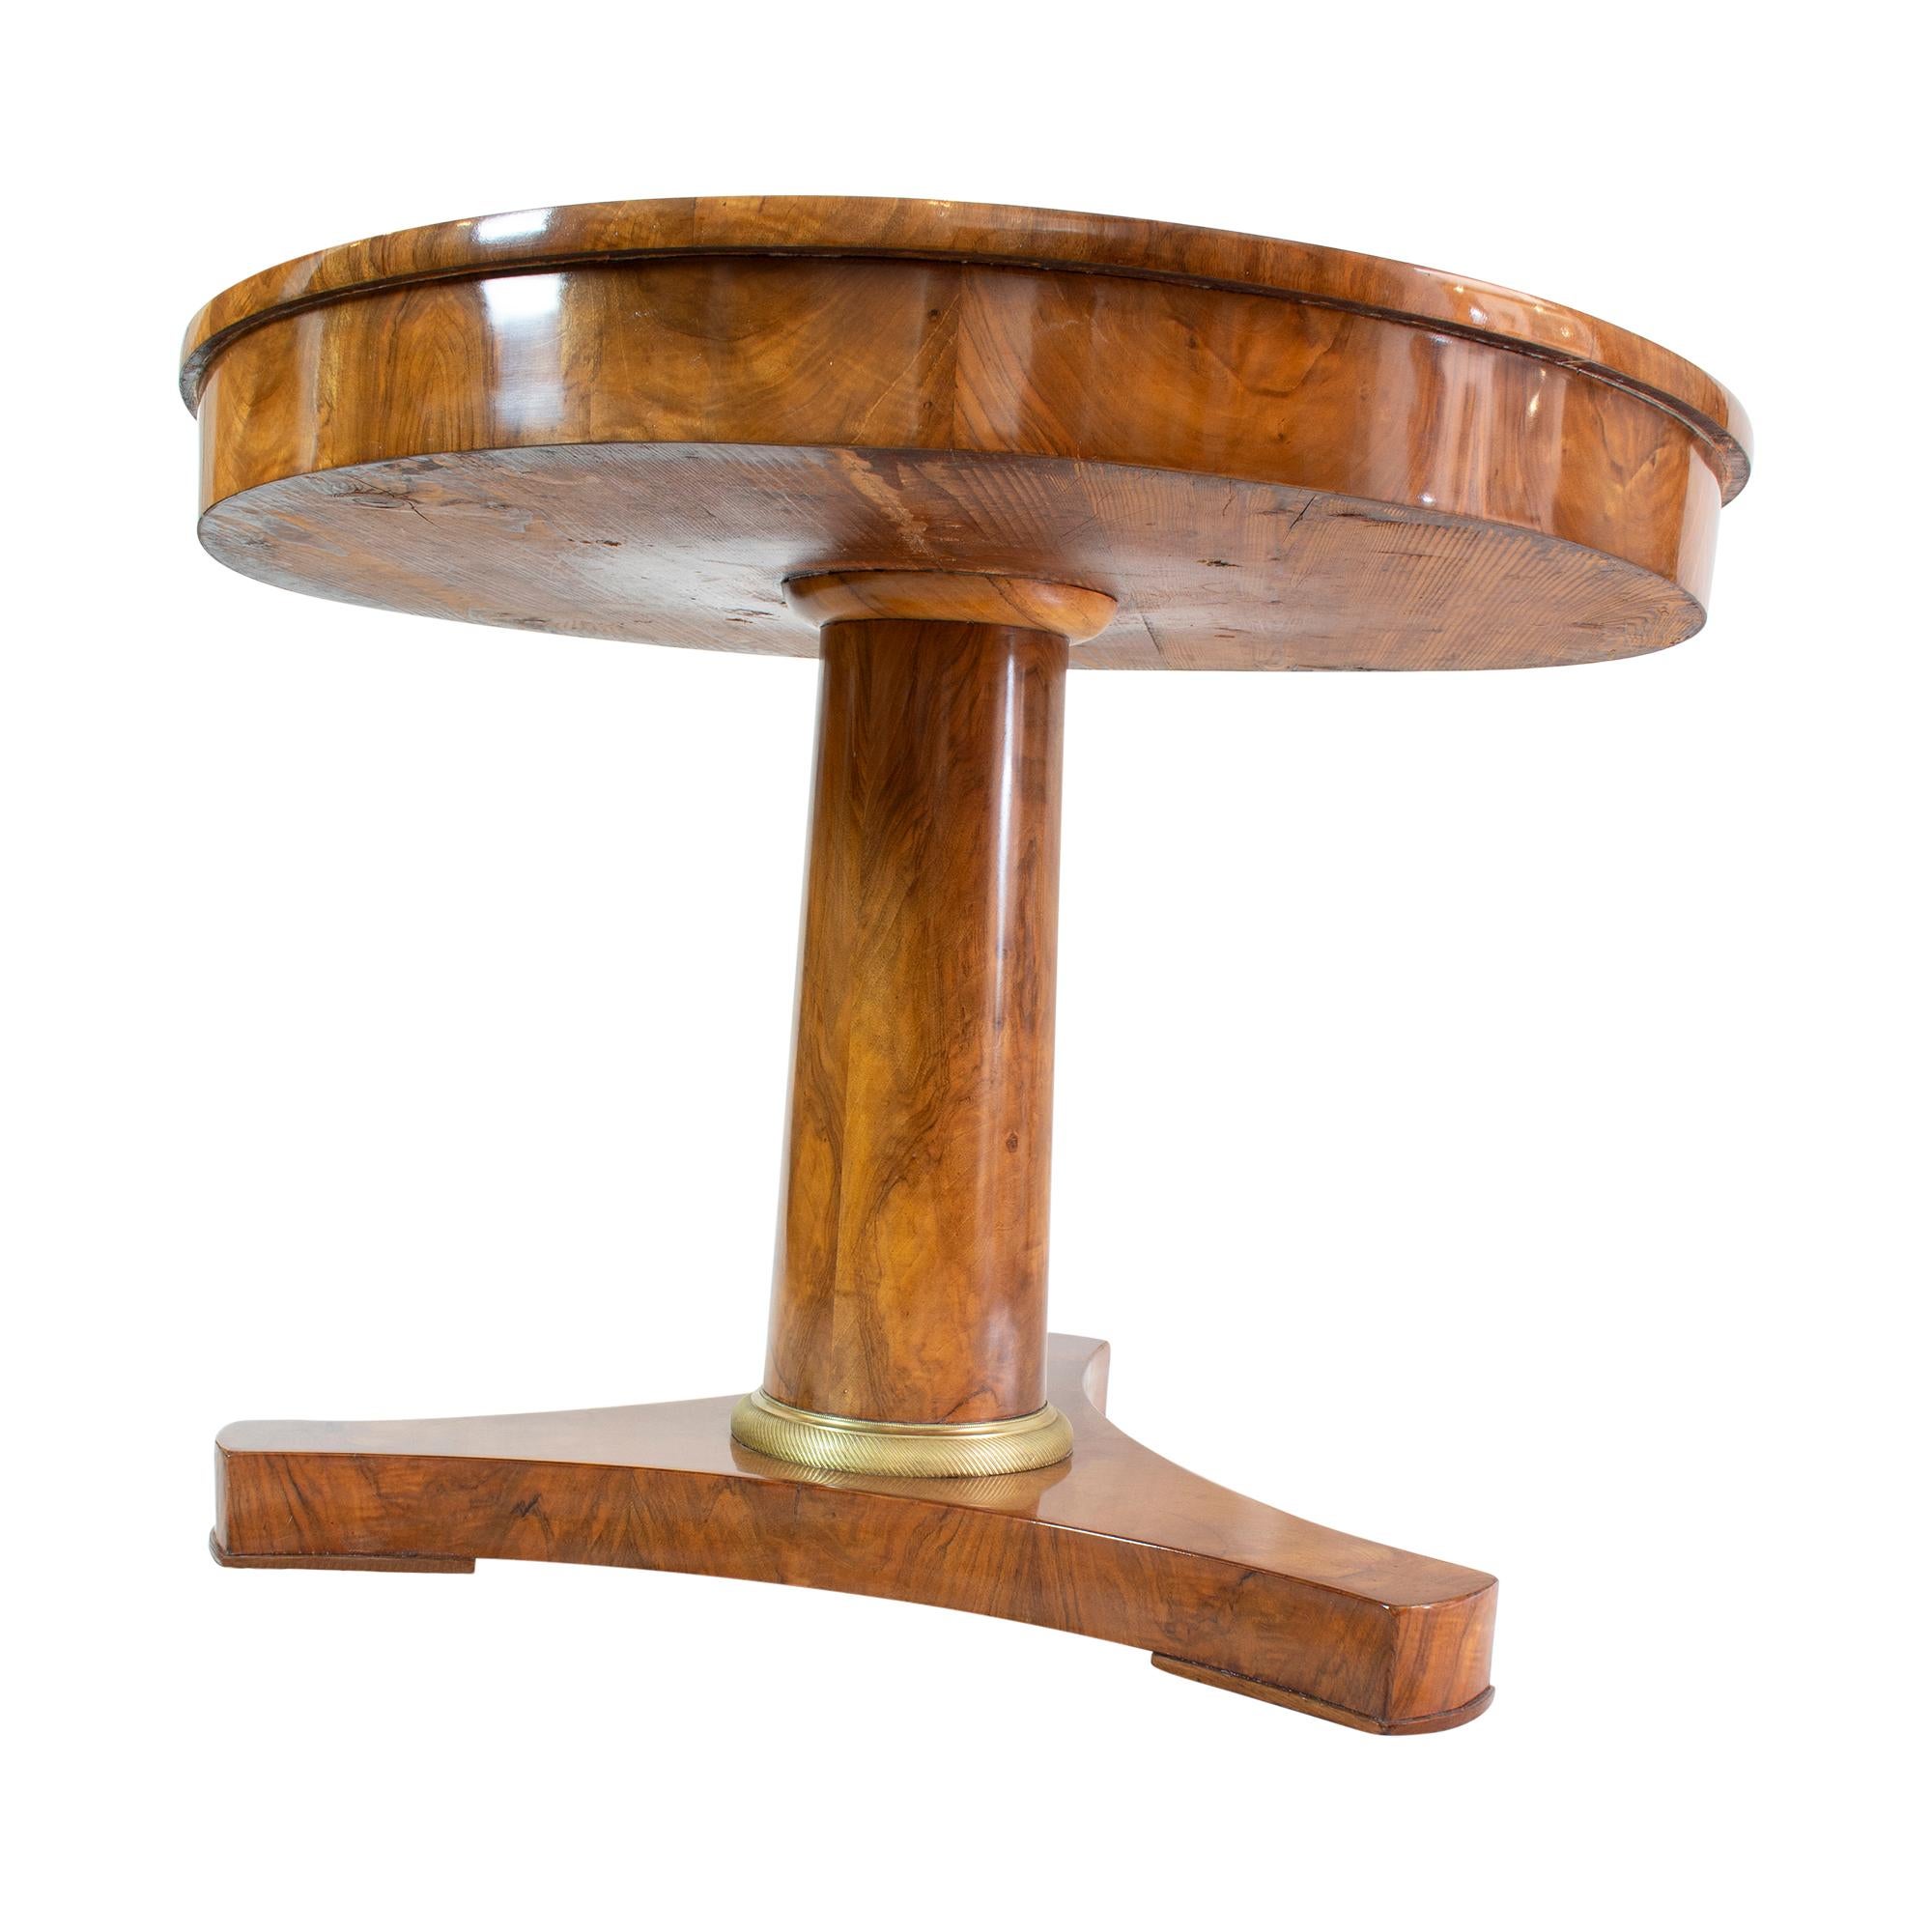 Polished 19th Century Biedermeier / Empire Round Salon Walnut Table